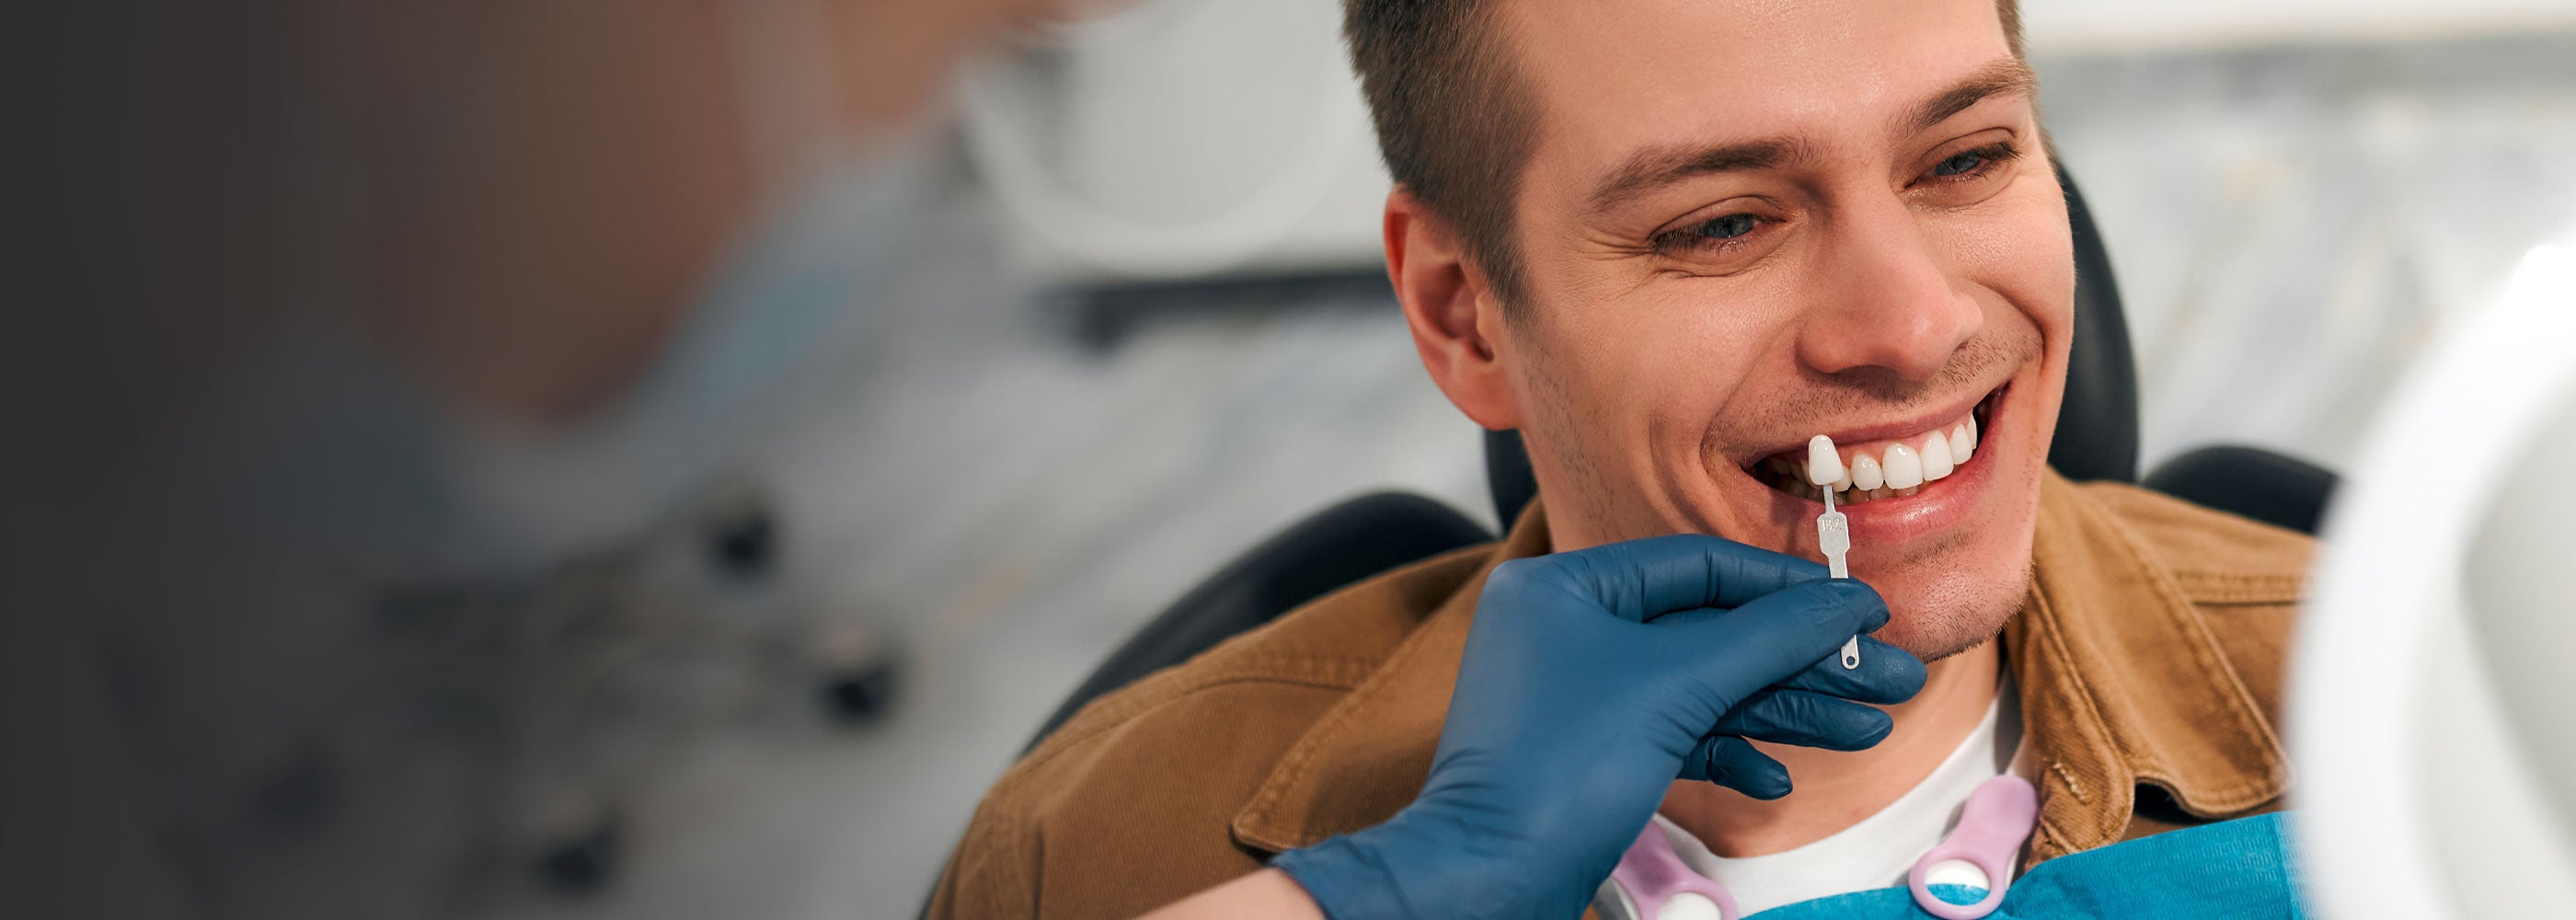 Patient having teeth whitening treatment